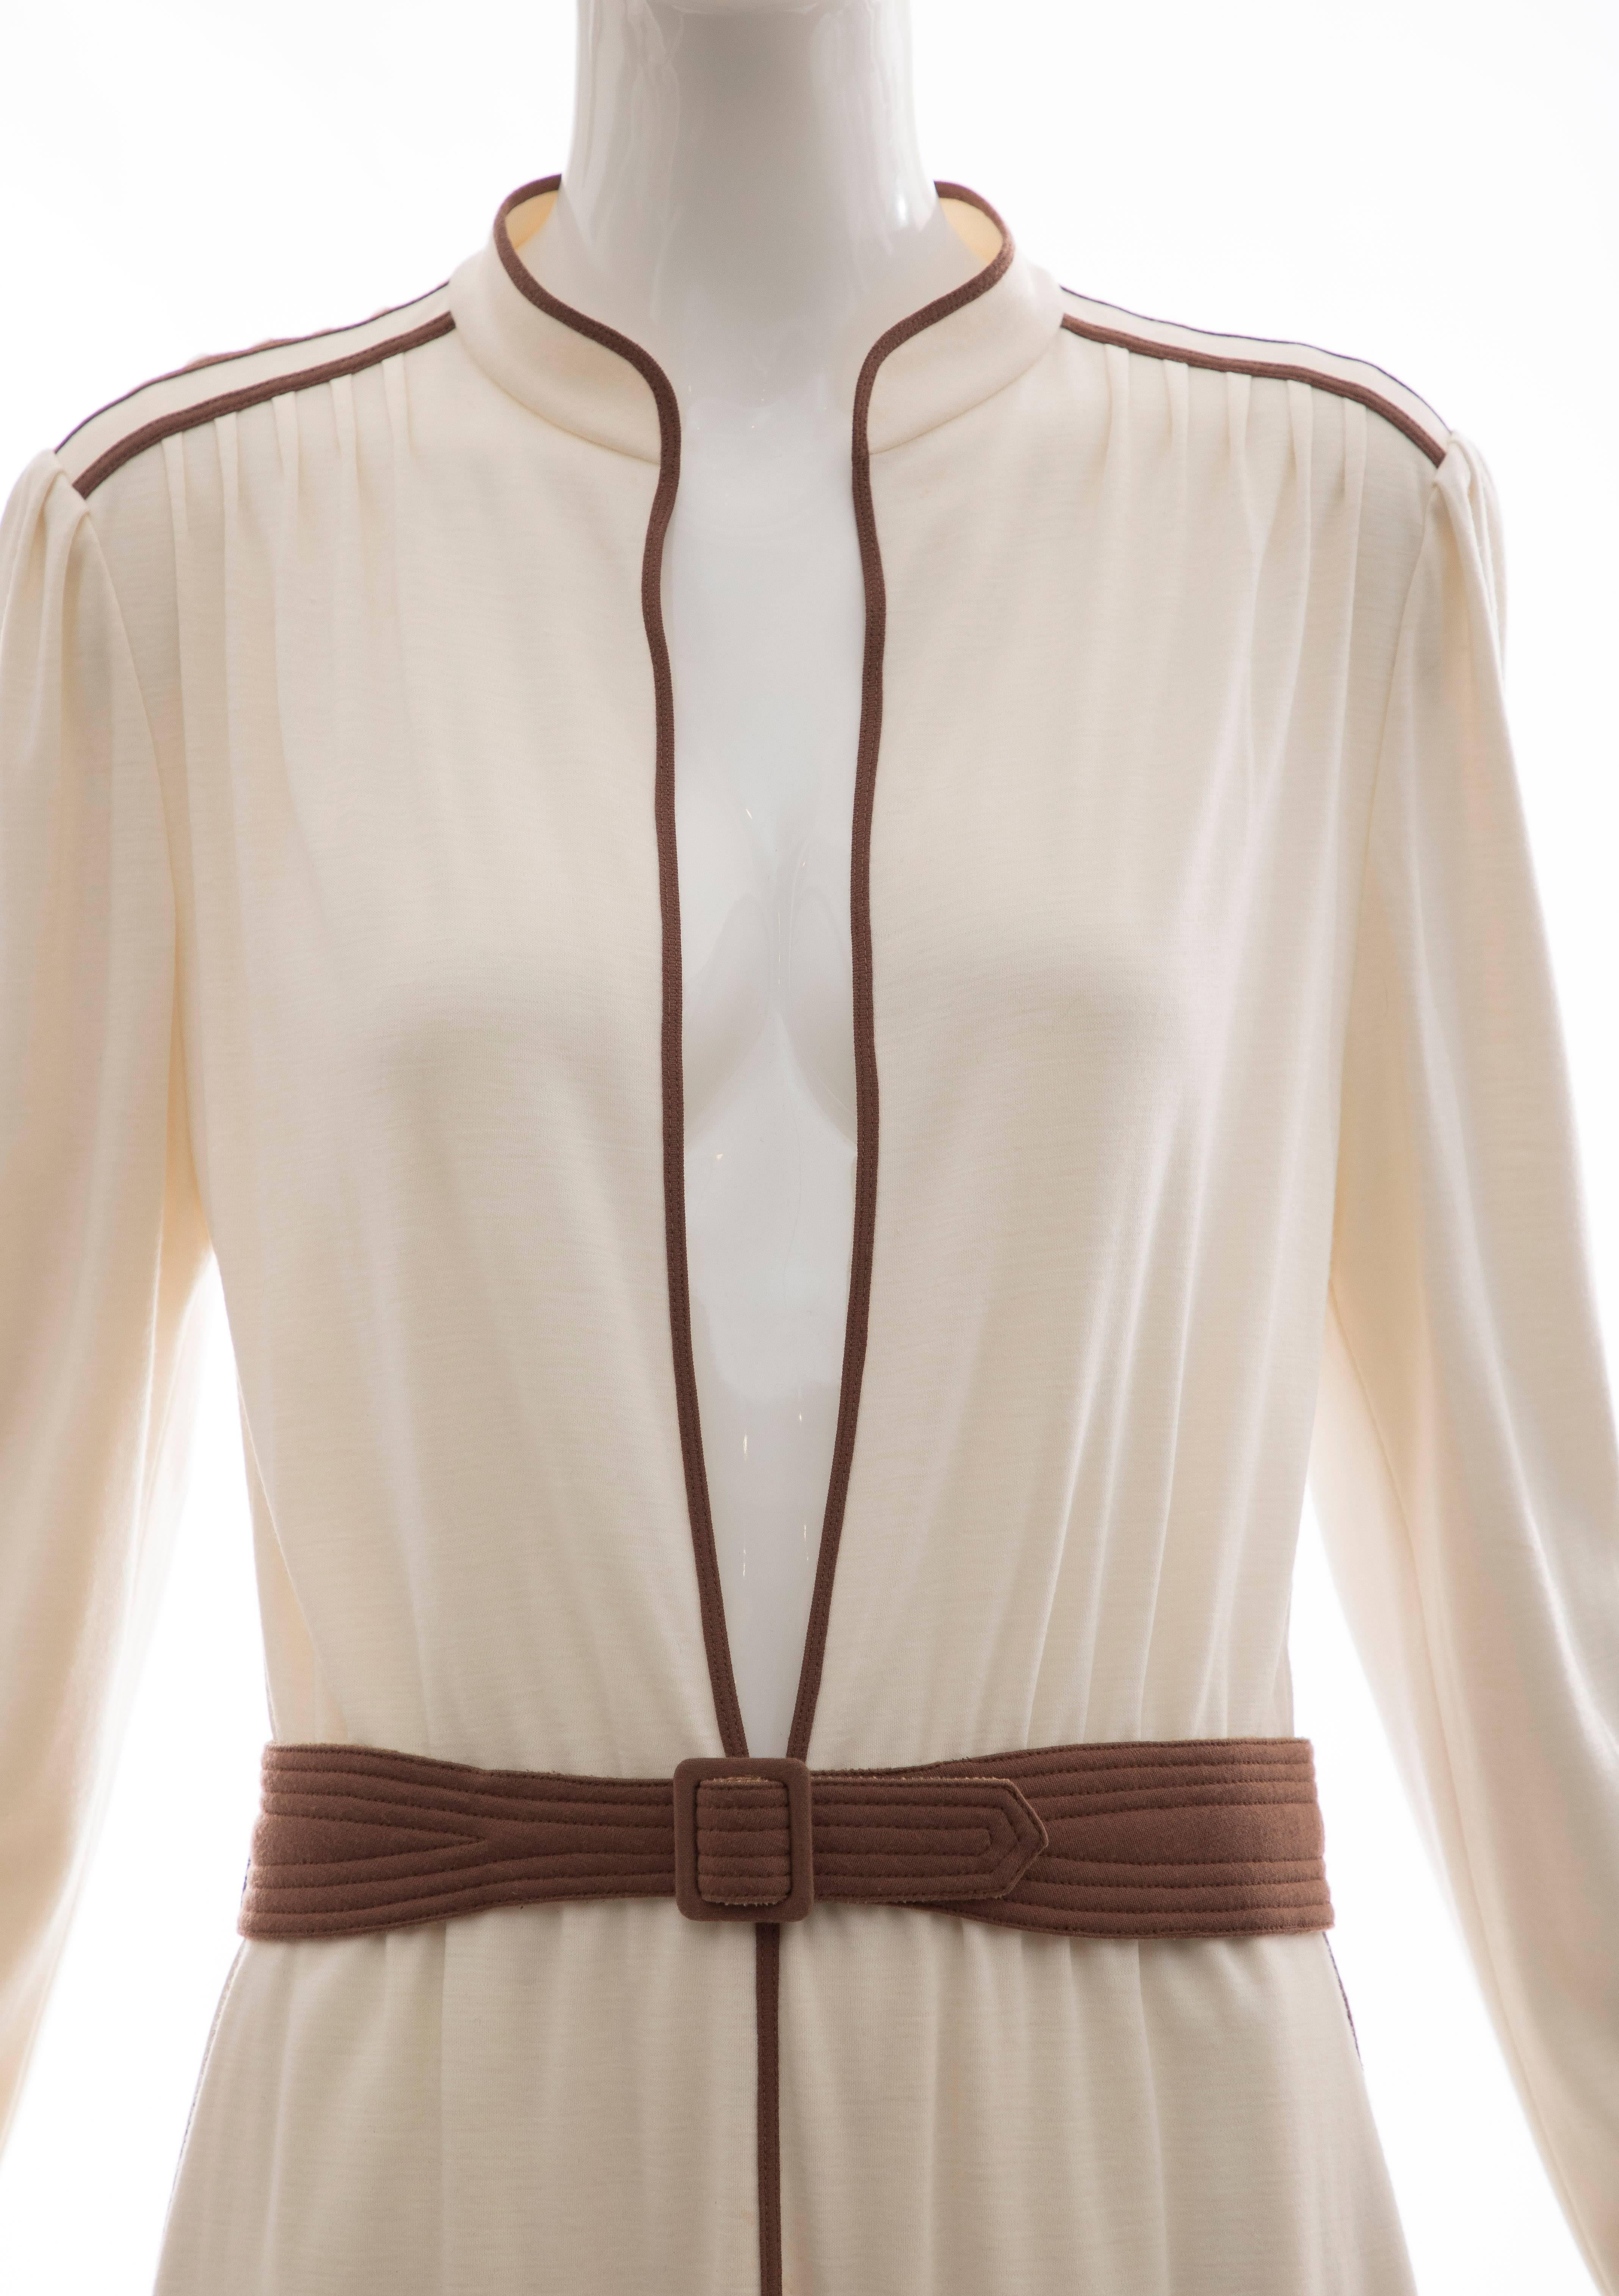 Louis Feraud Cream Cotton Jersey Dress With Deep V Neckline, Circa 1980s  For Sale 1